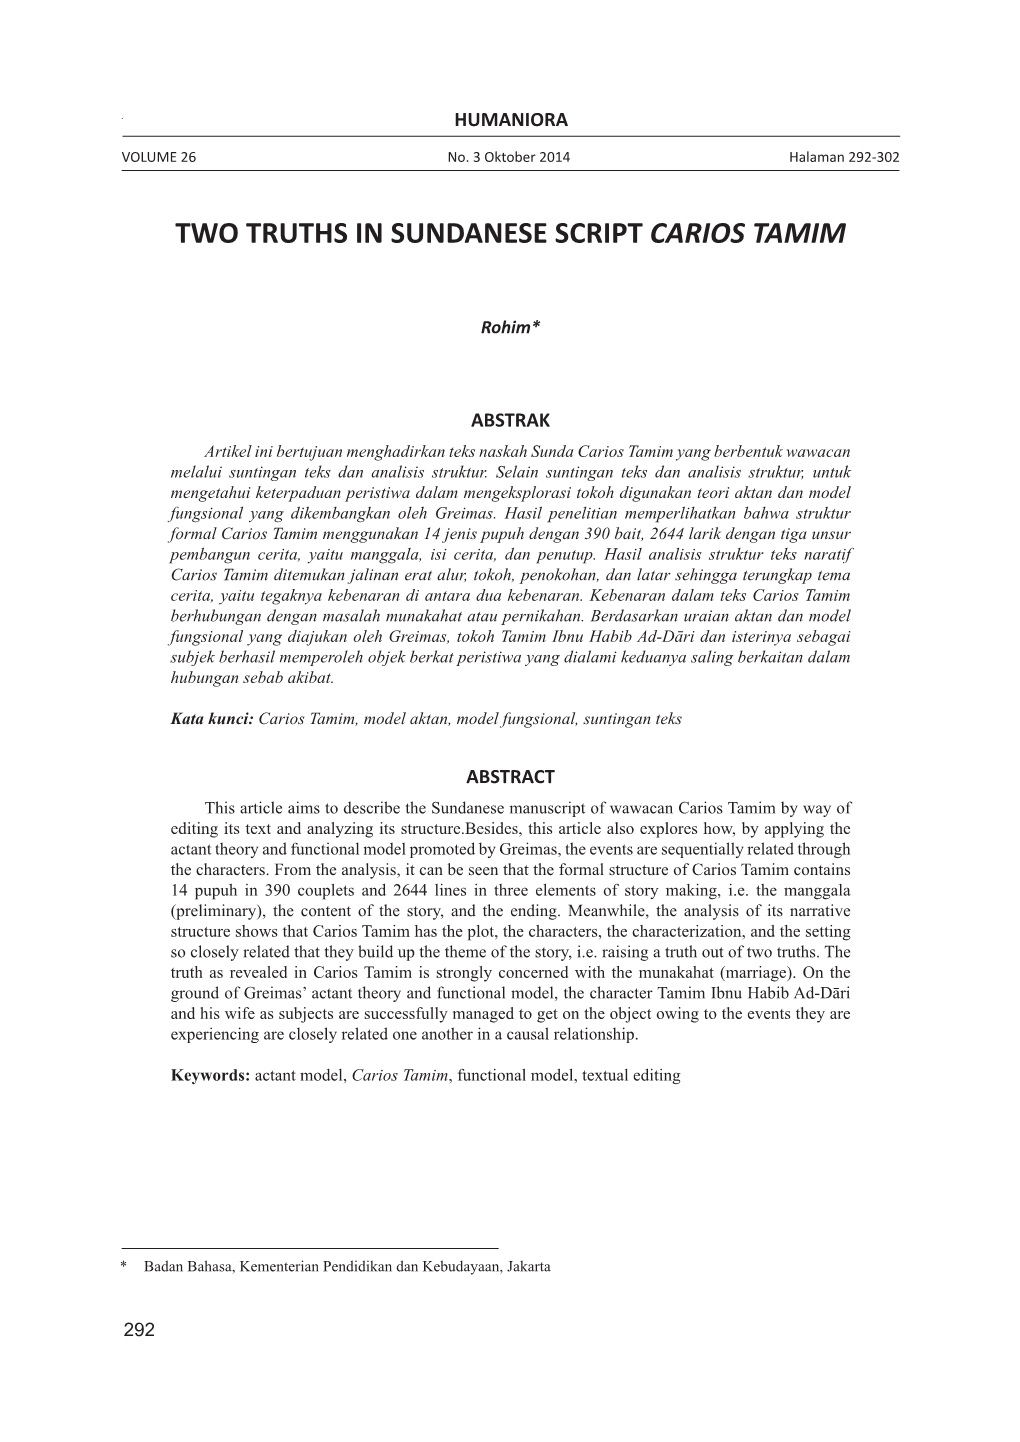 Two Truths in Sundanese Script Carios Tamim